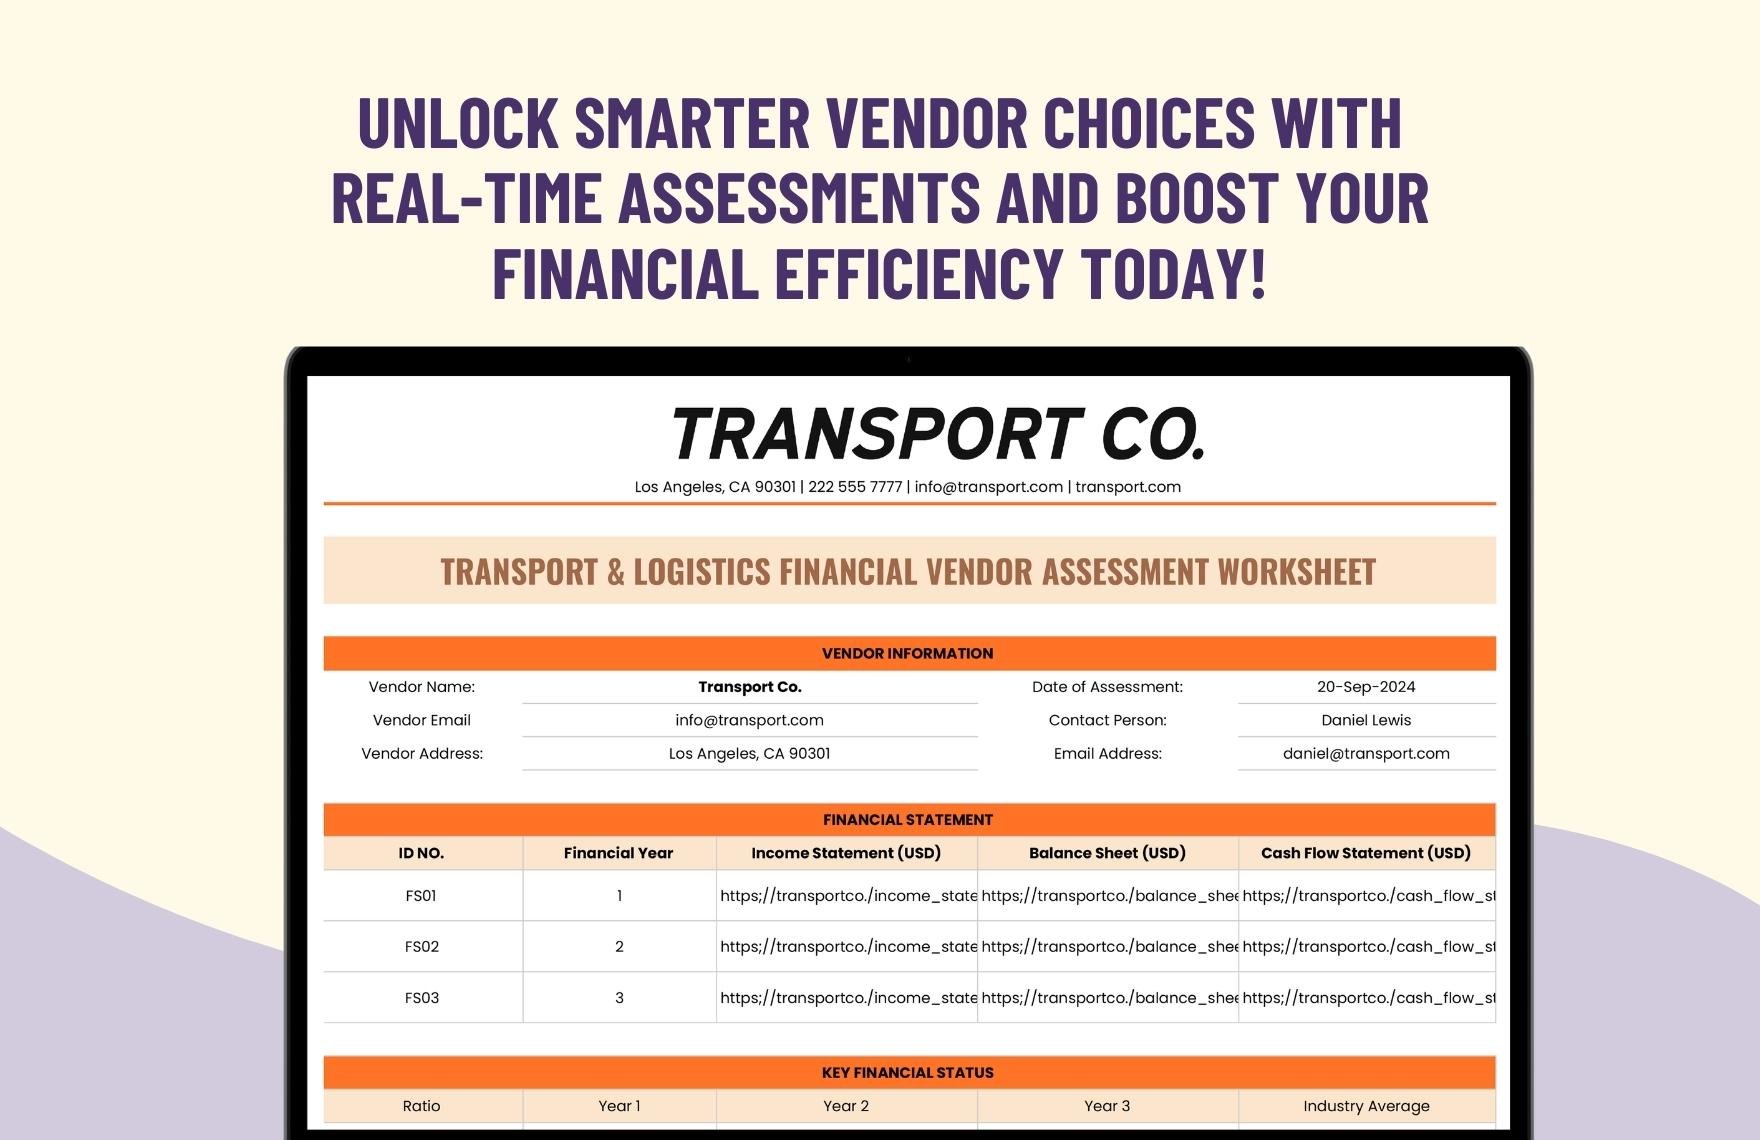 Transport and Logistics Financial Vendor Assessment Worksheet Template